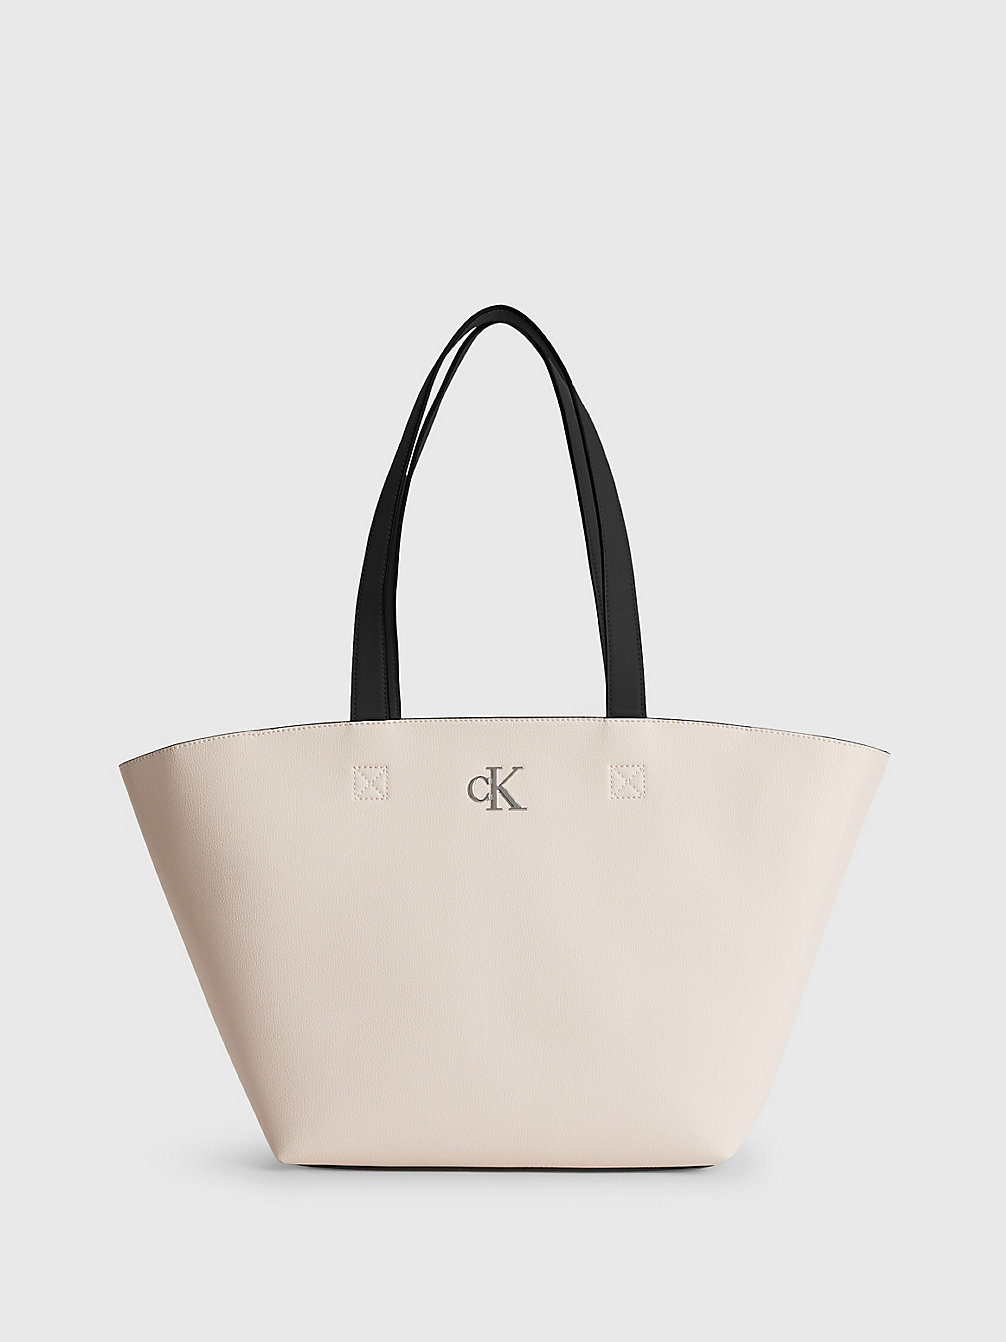 Tote Bags For Women - Mini, Large & More | Calvin Klein®